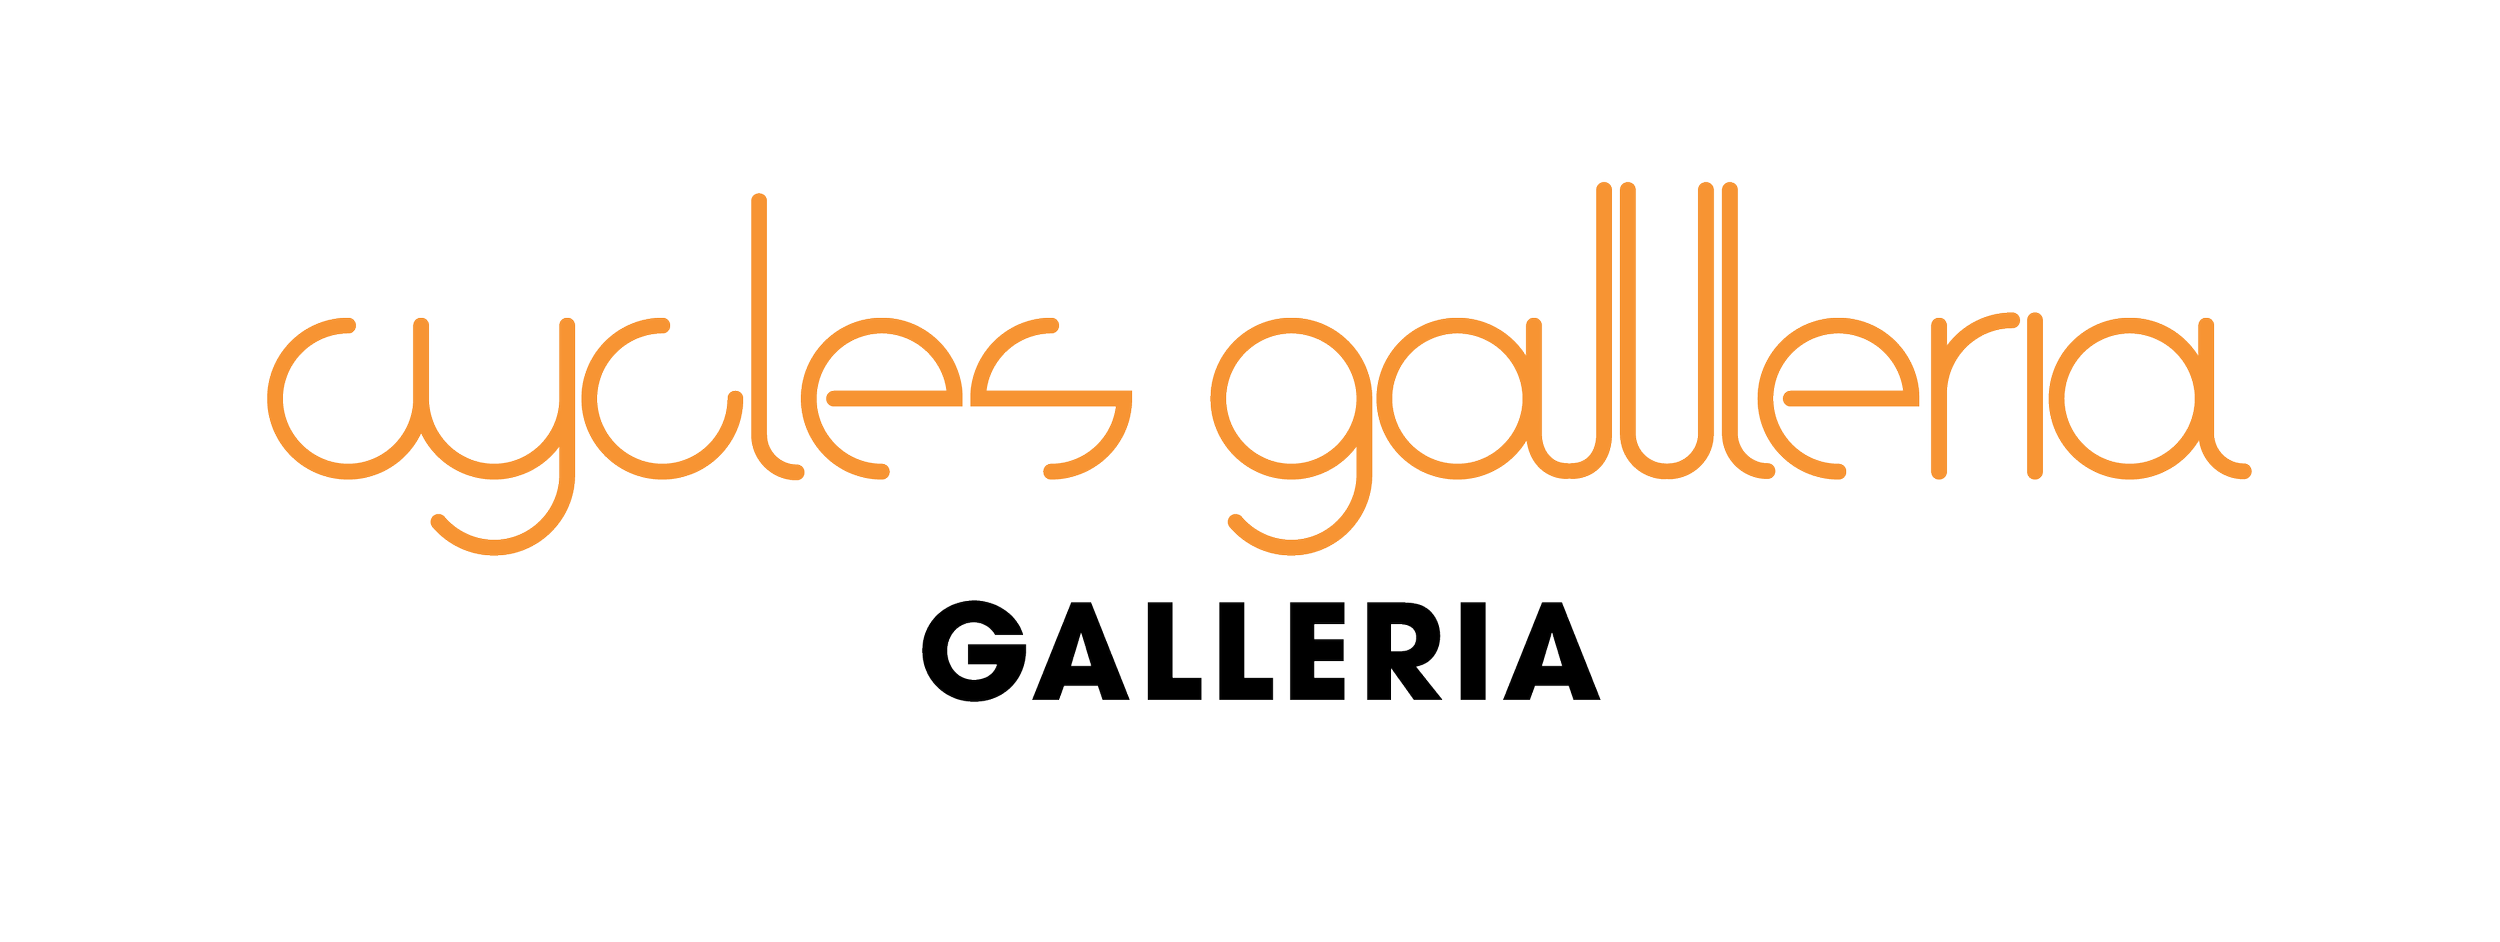 CG_logo_location_Galleria.png